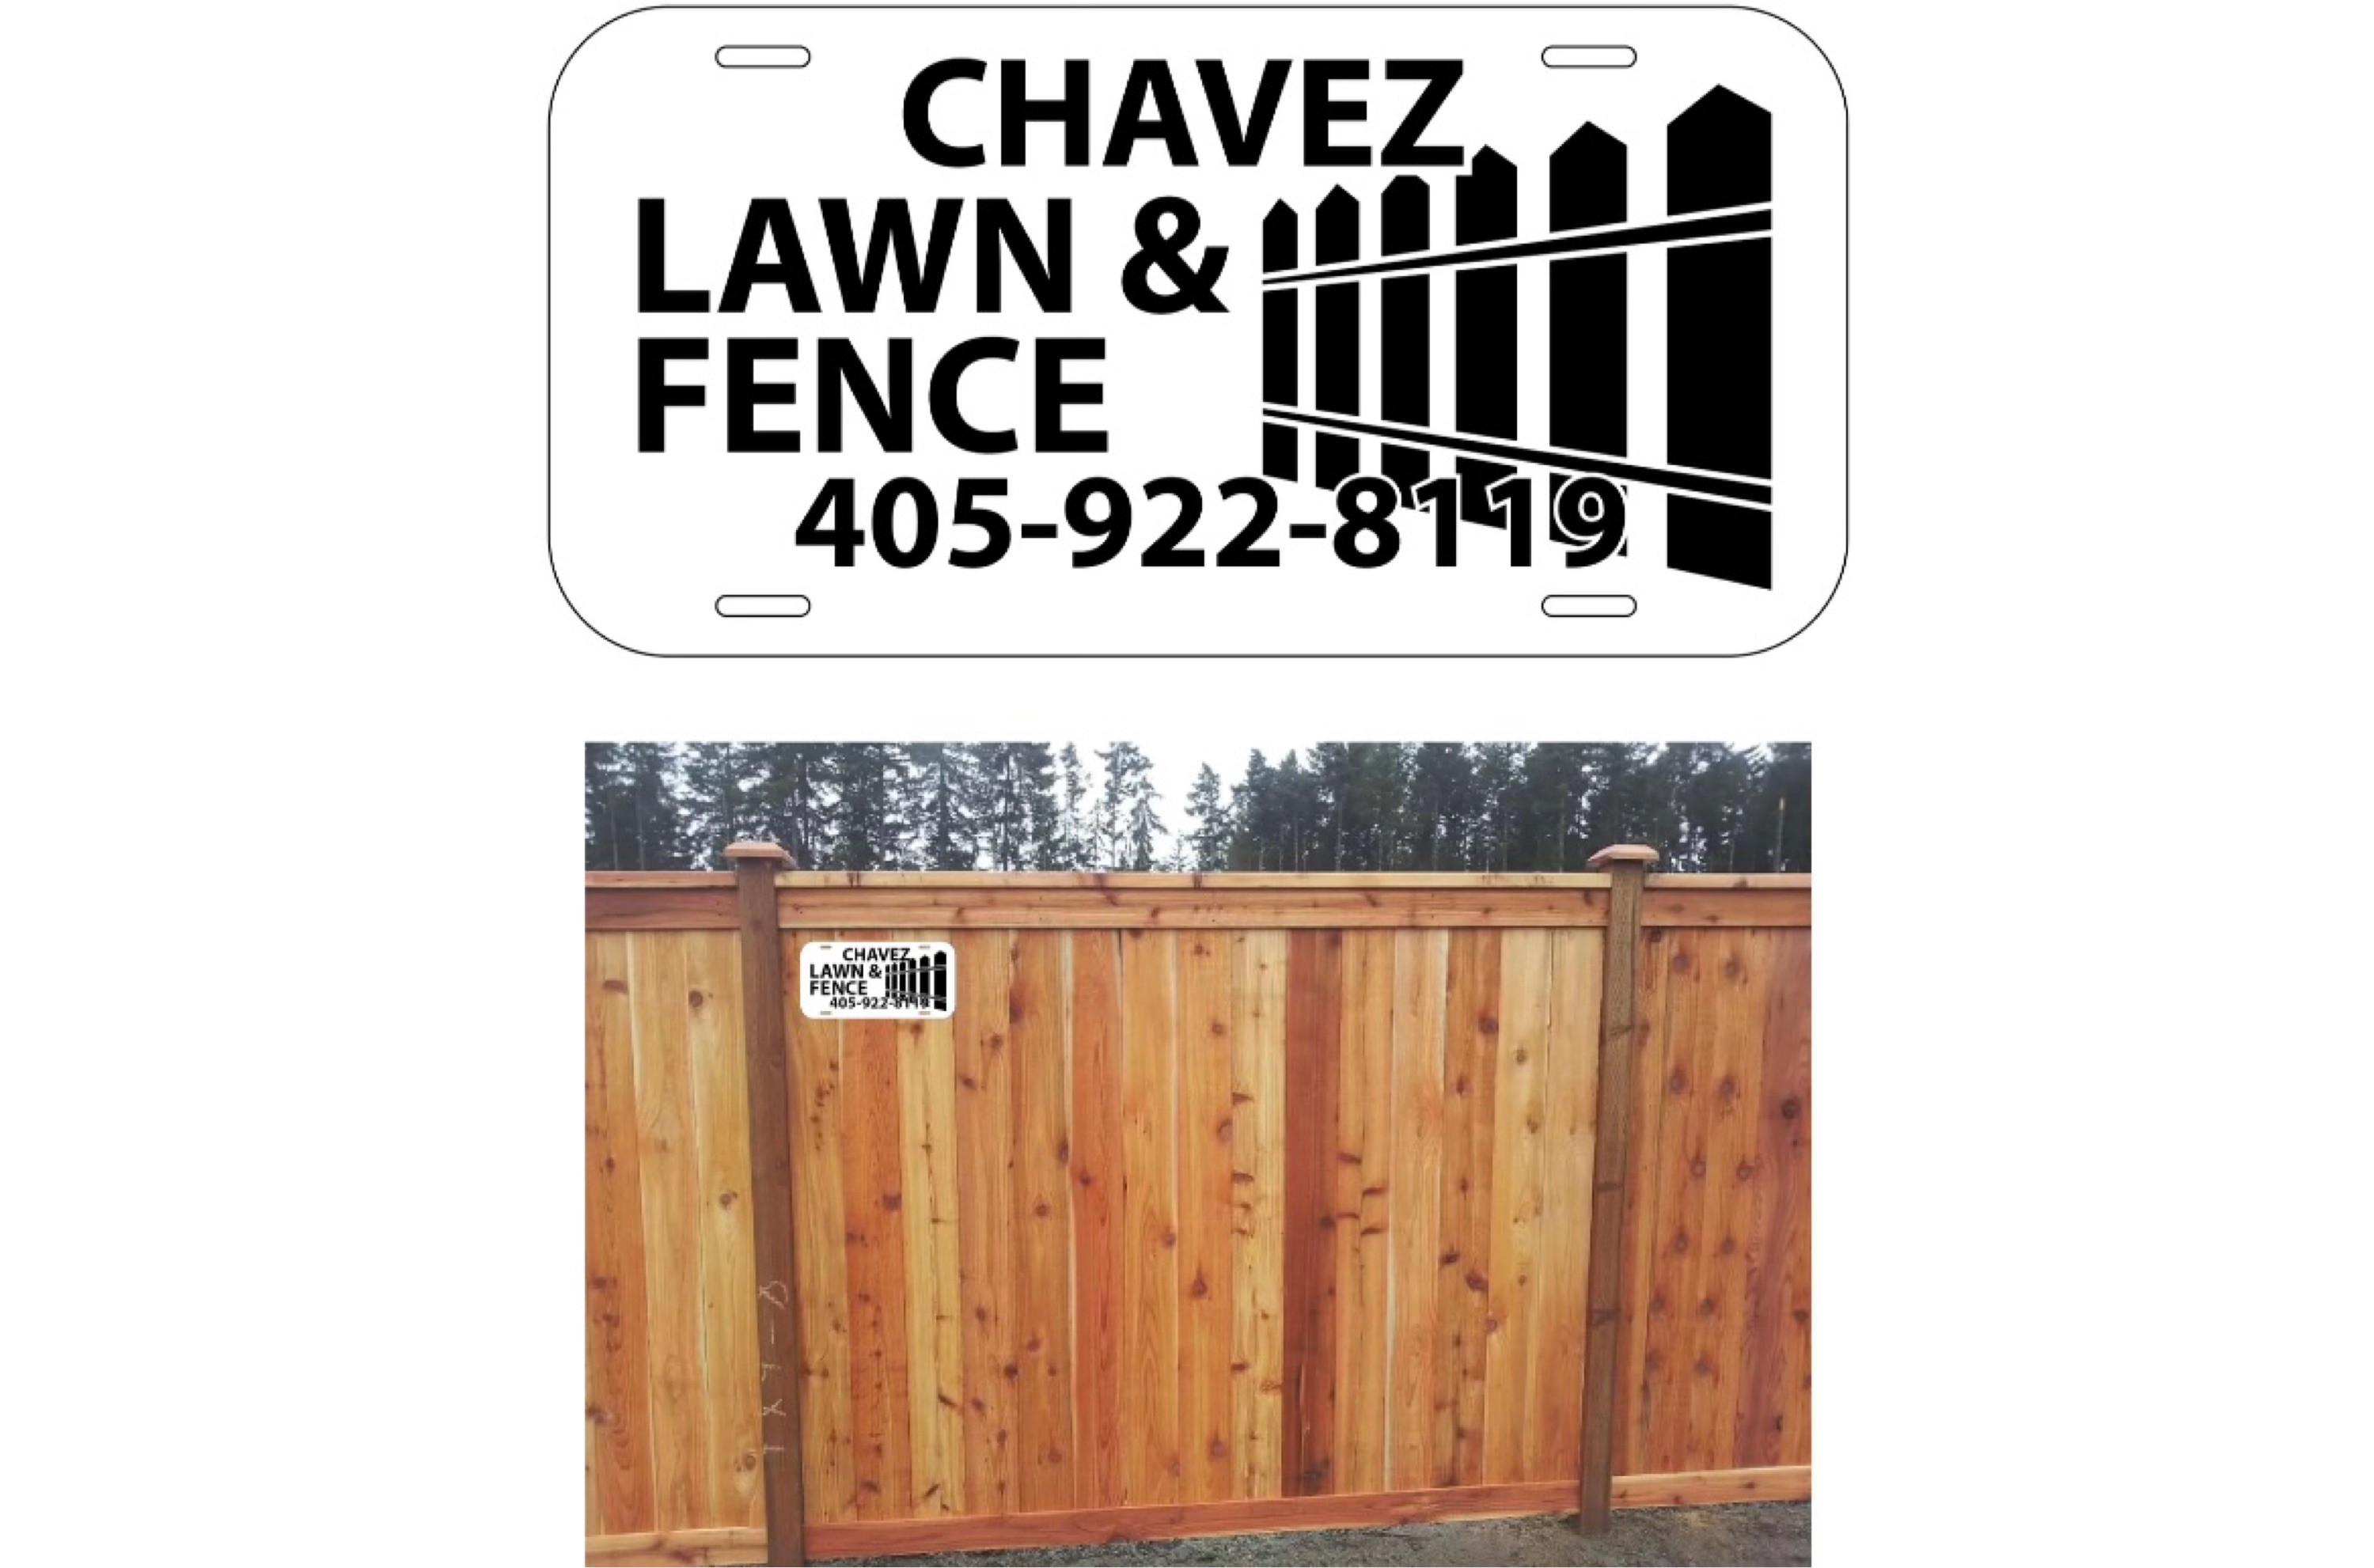 Chavezlawn&fence Logo